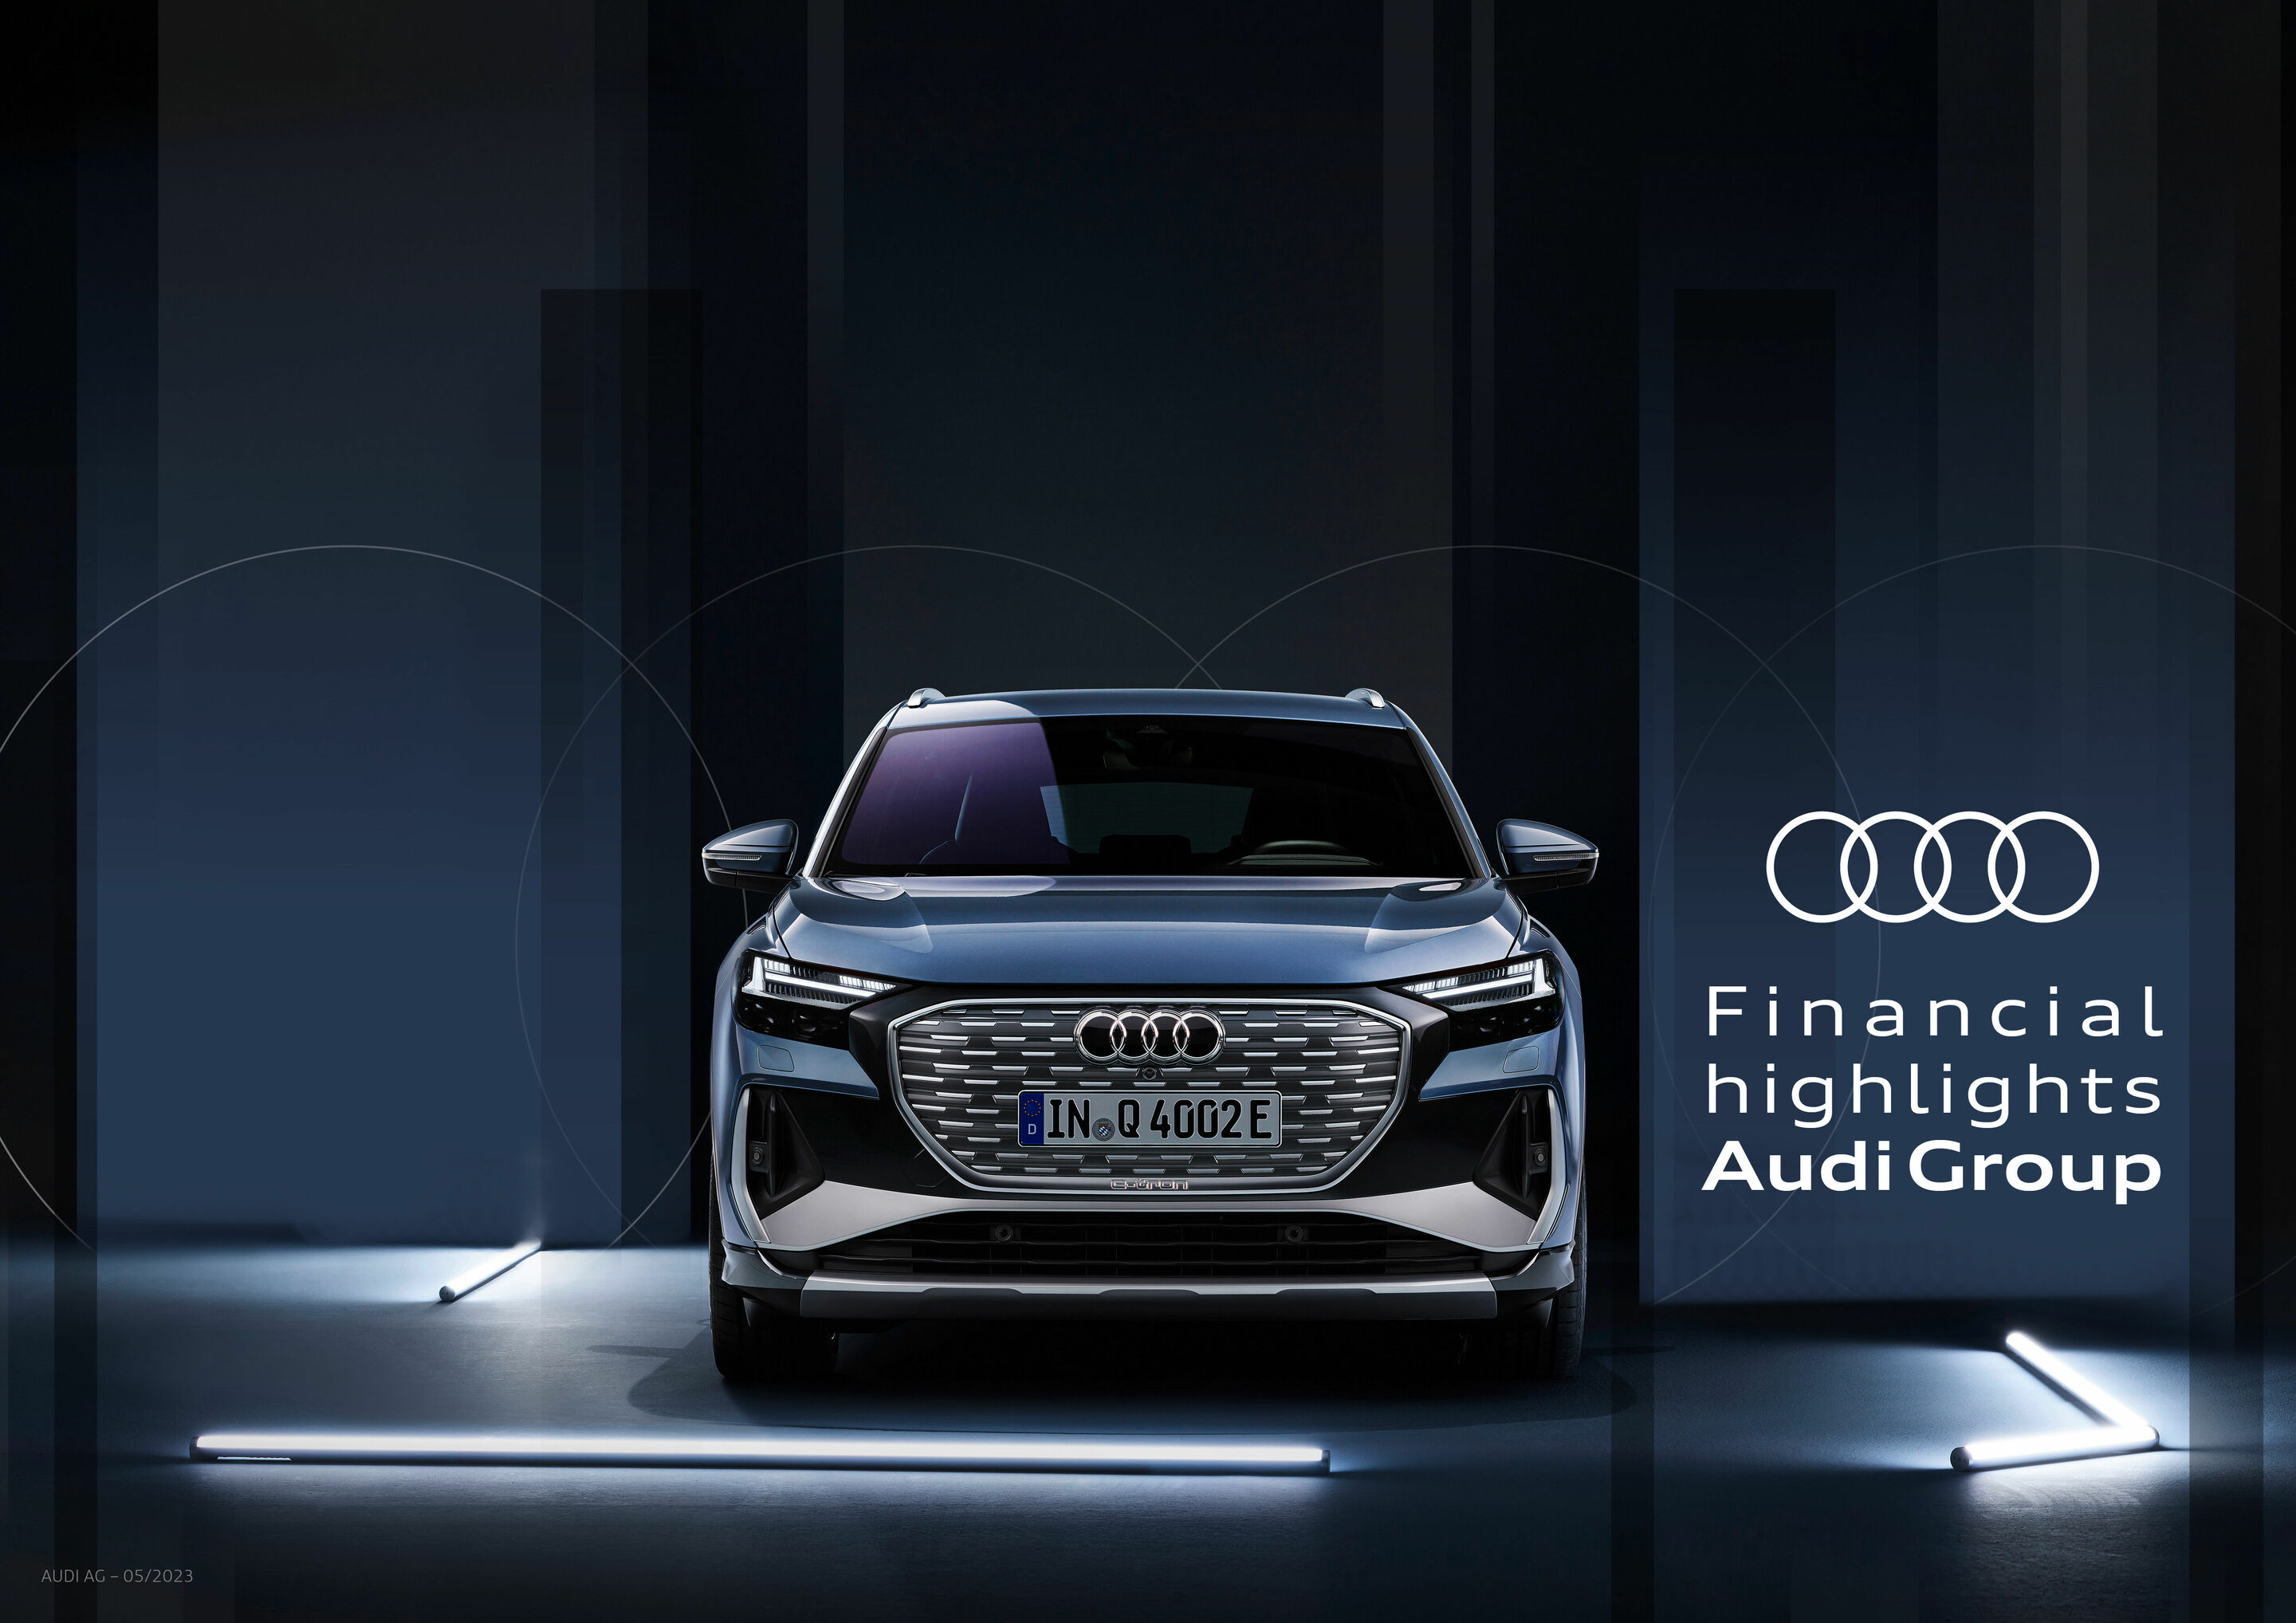 Q1/2023 Financial highlights Audi Group